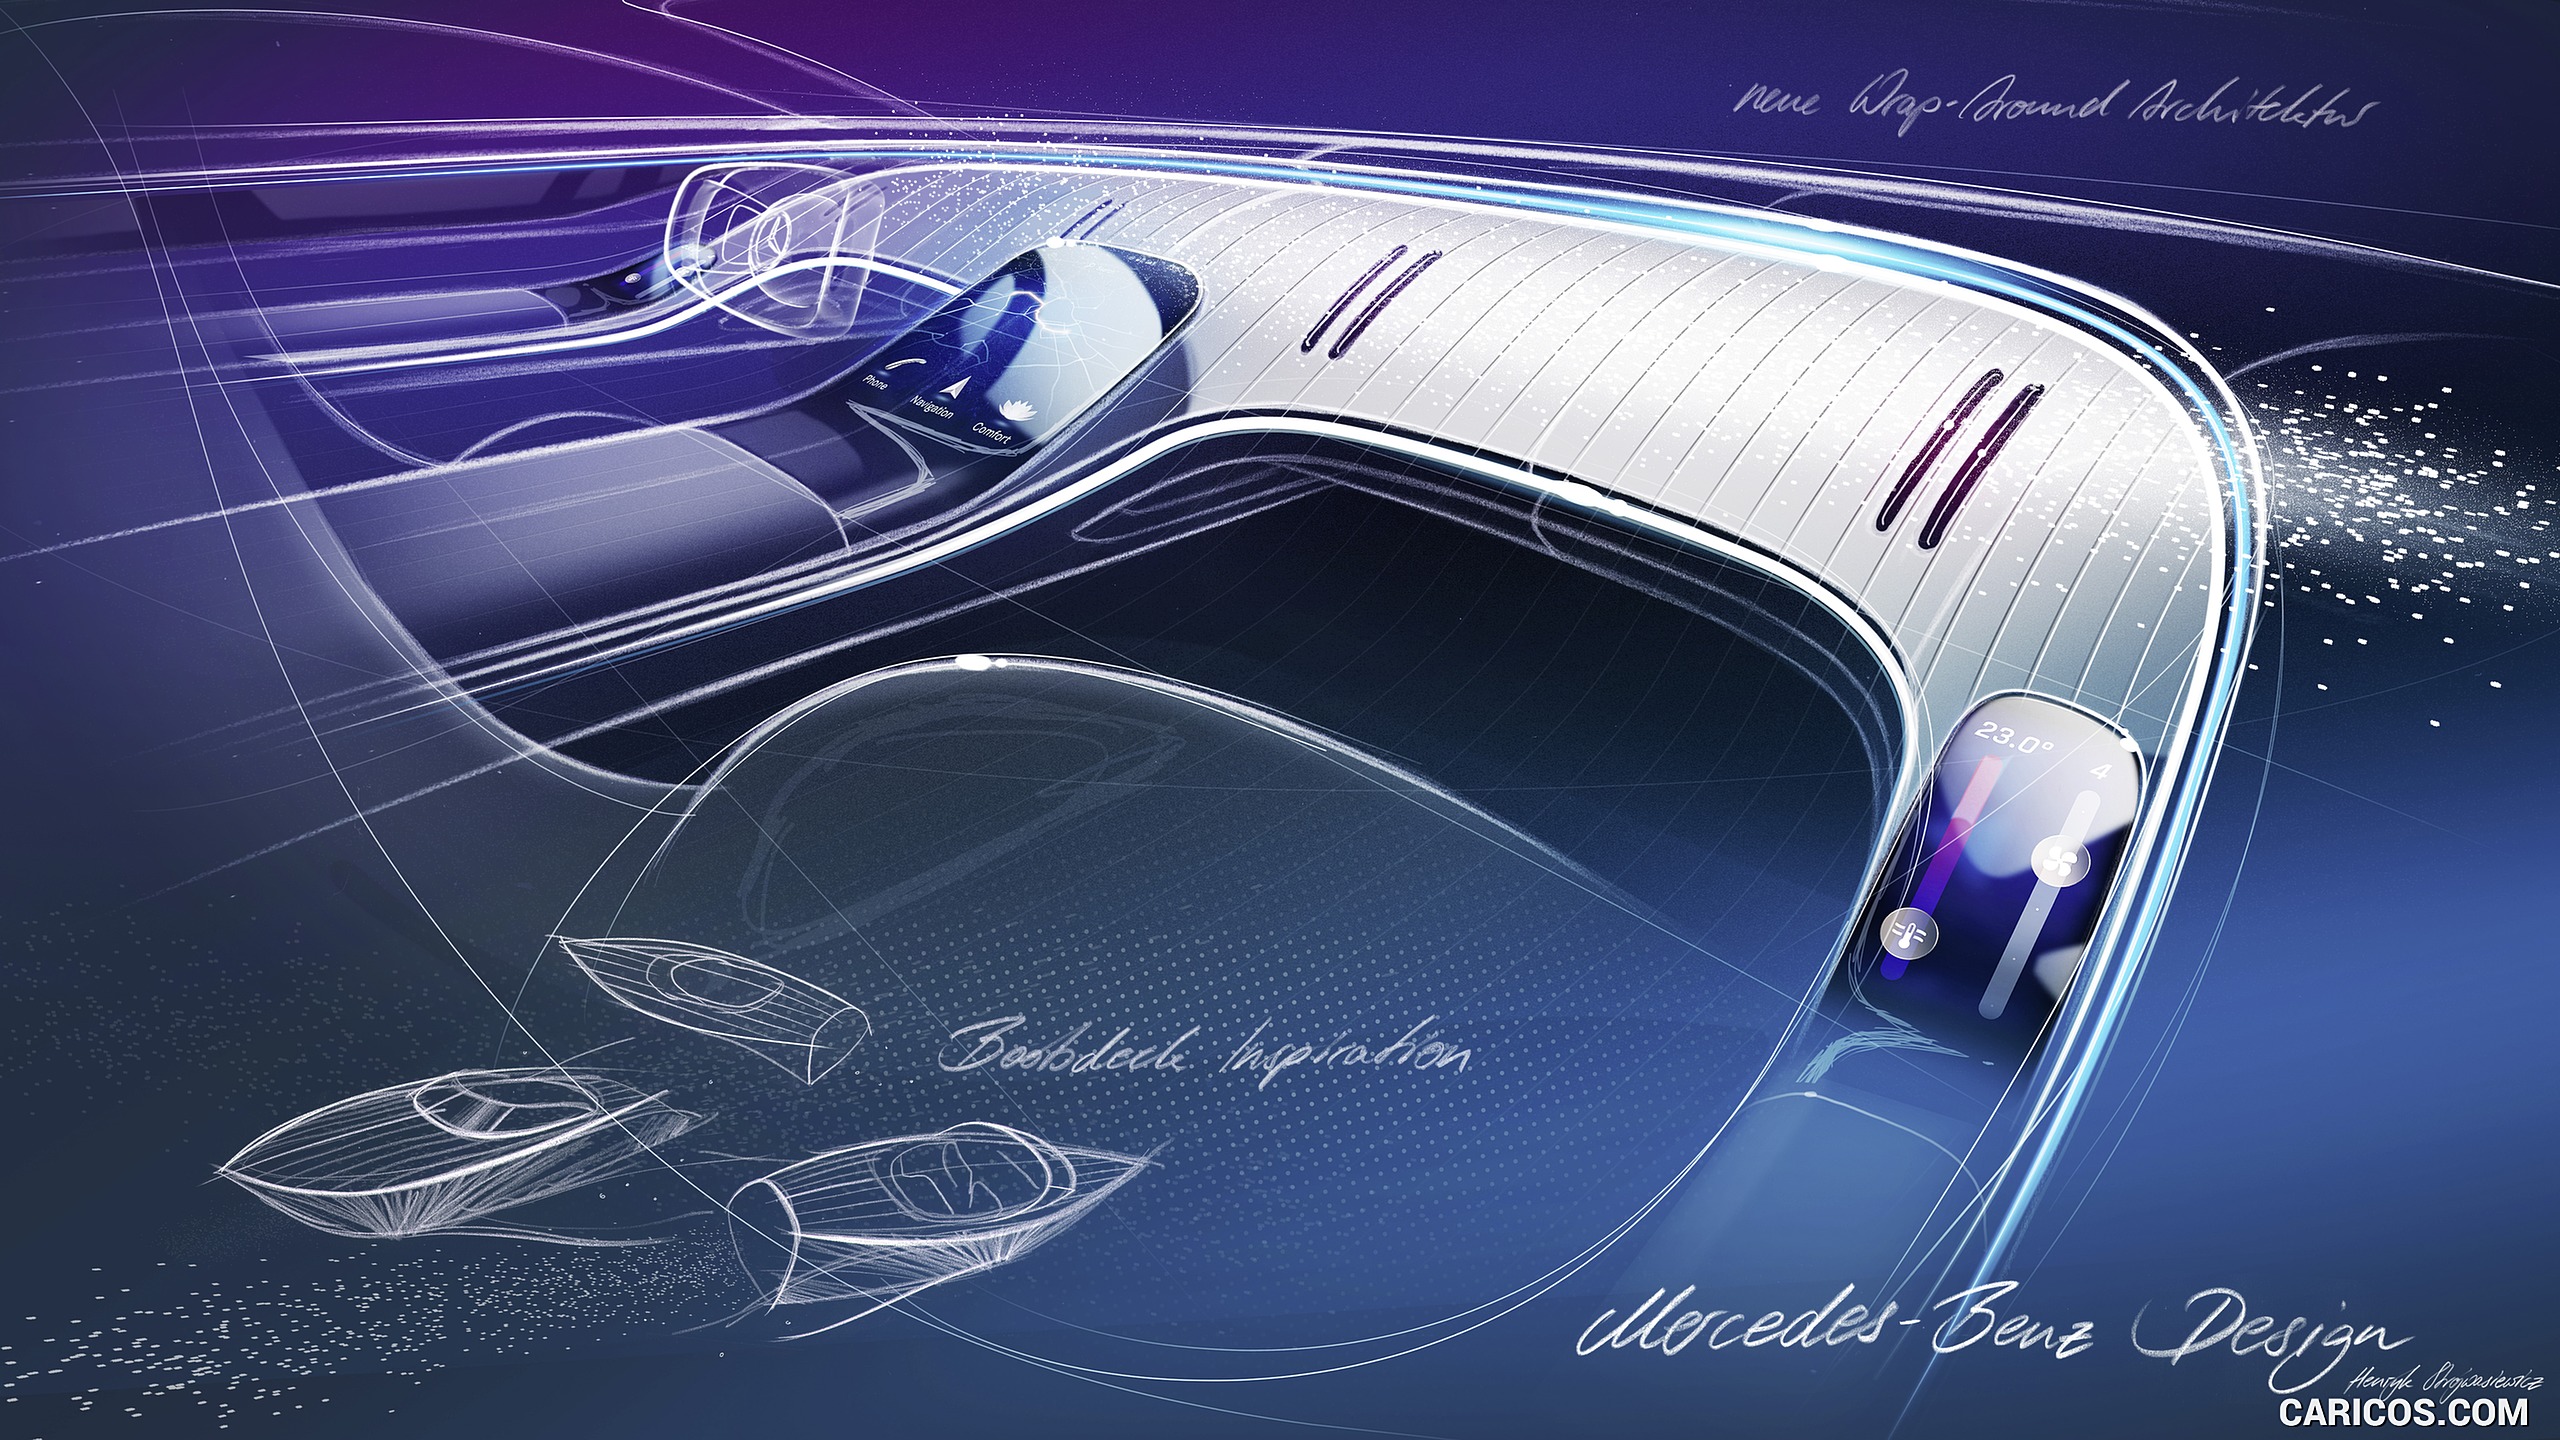 2019 Mercedes-Benz Vision EQS Concept - Design Sketch, #56 of 58